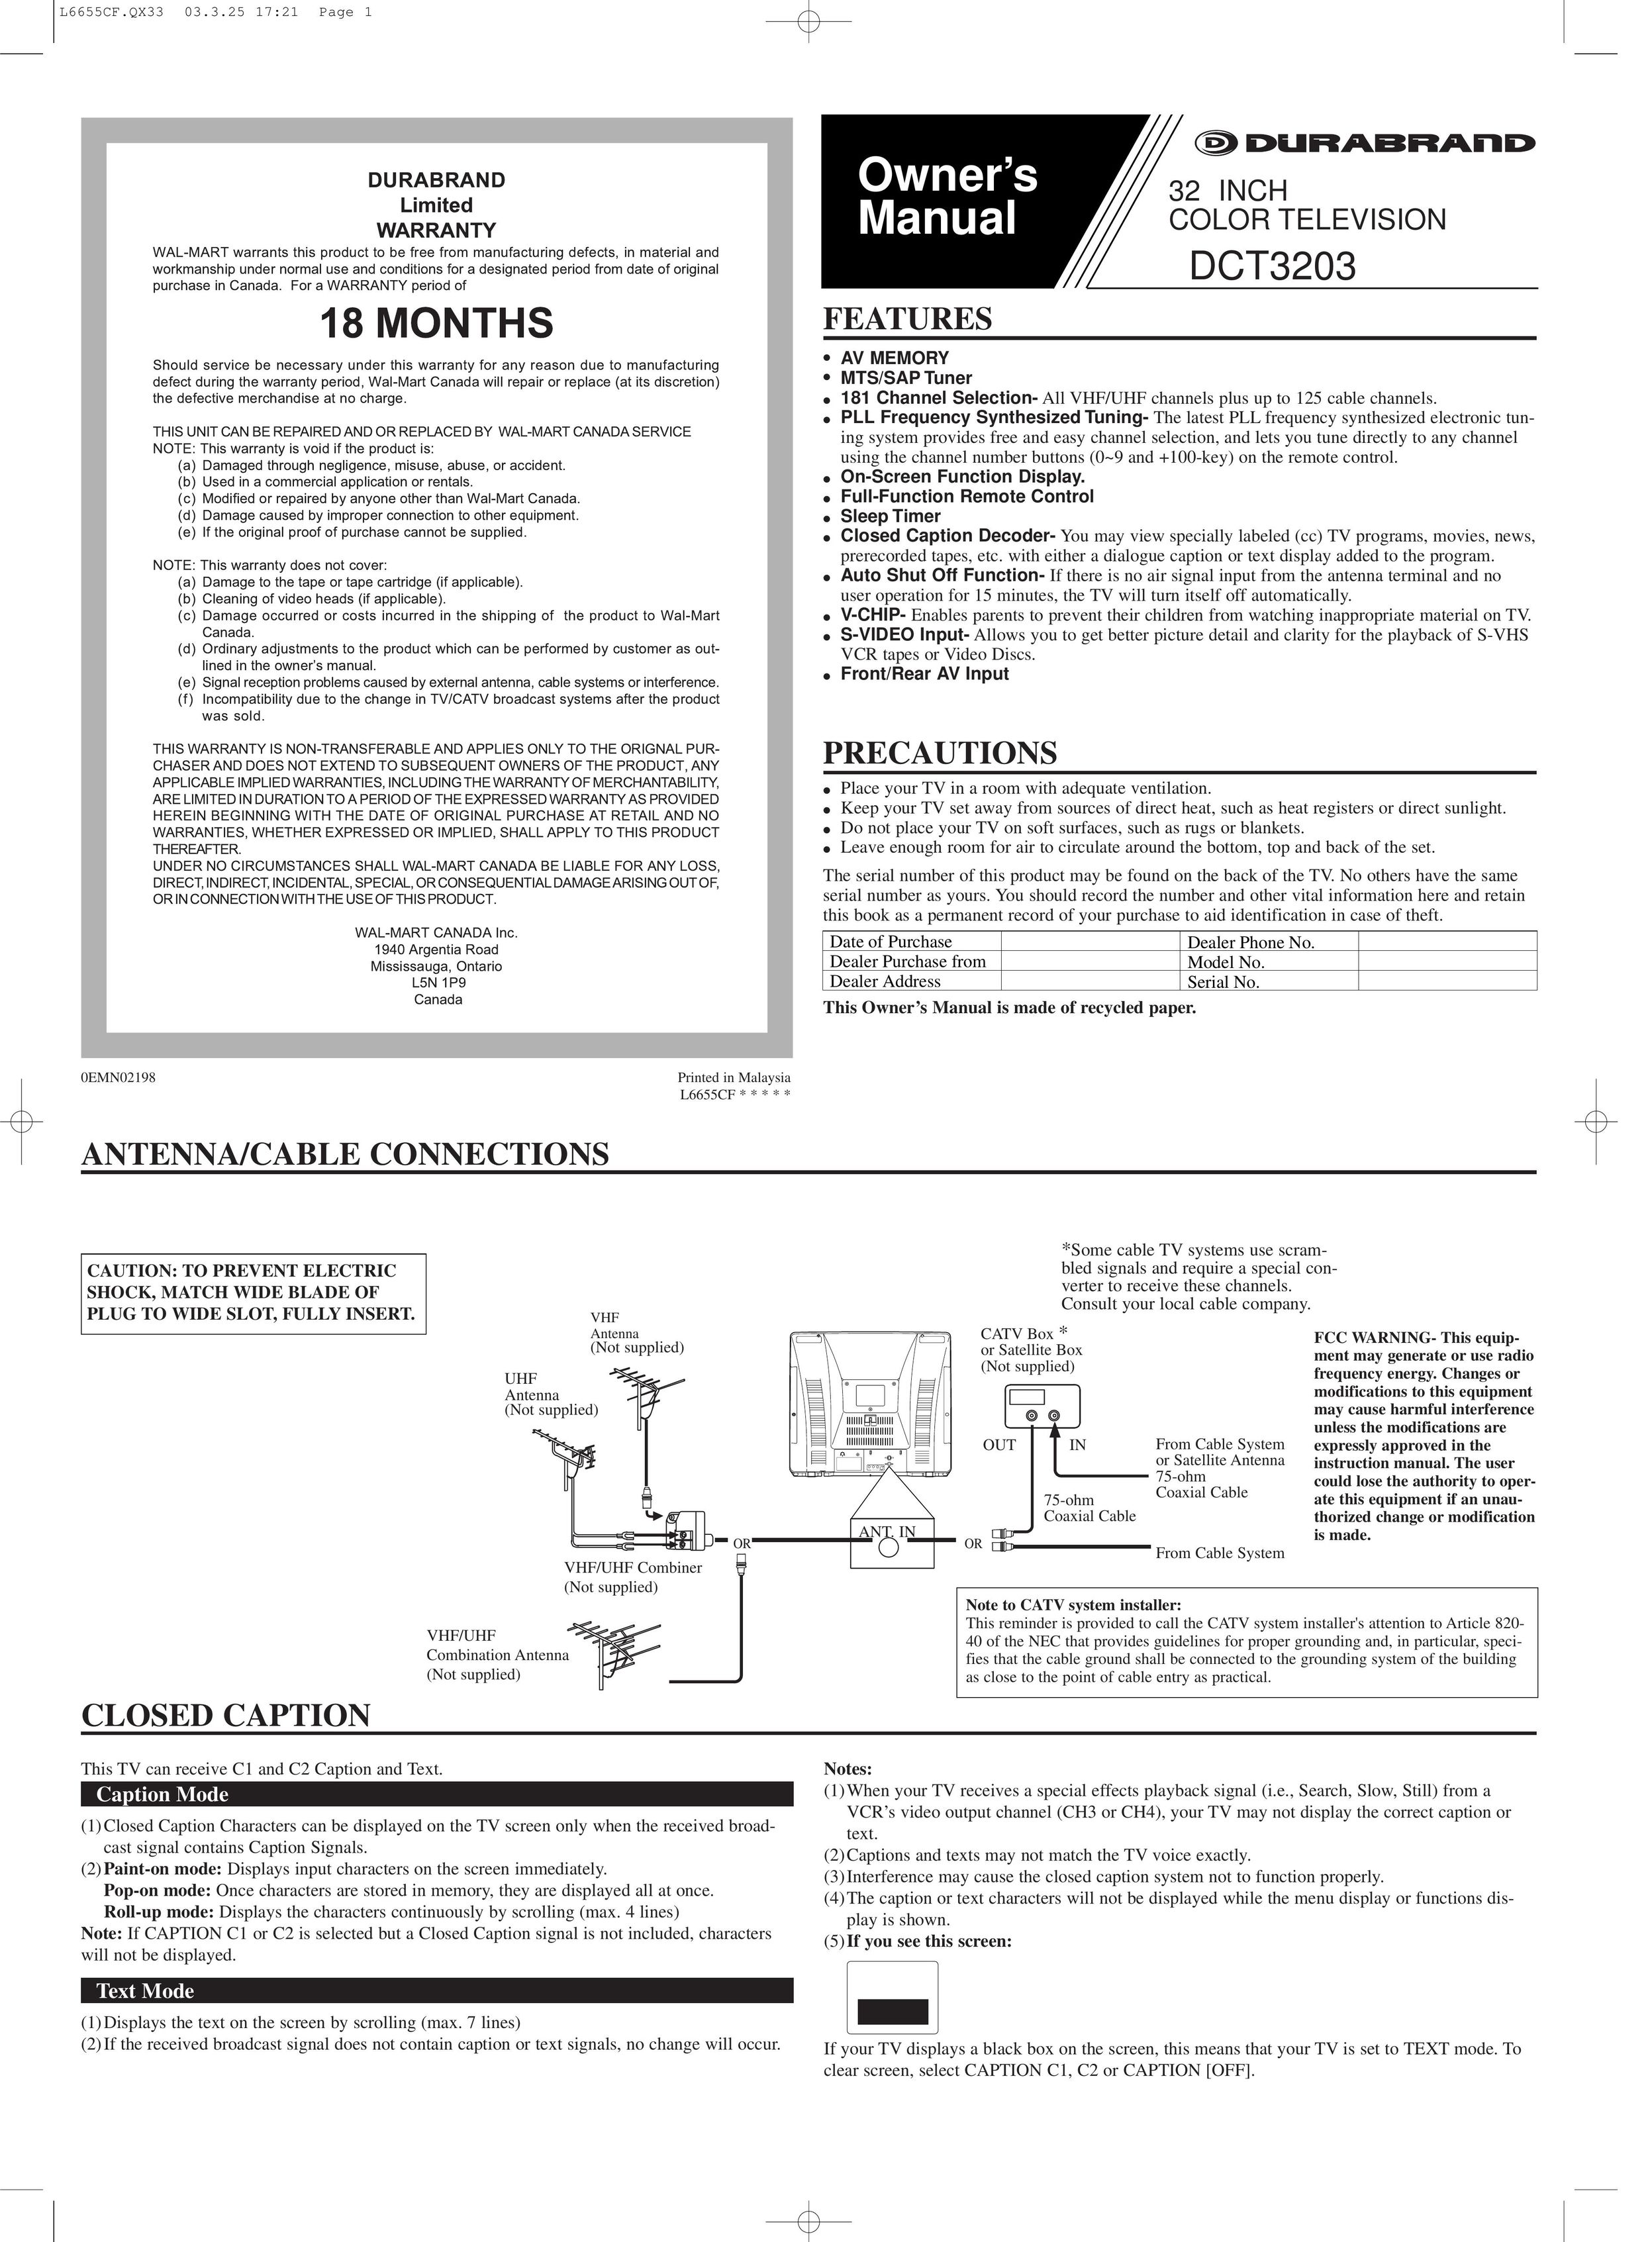 FUNAI DCT3203 CRT Television User Manual (Page 1)